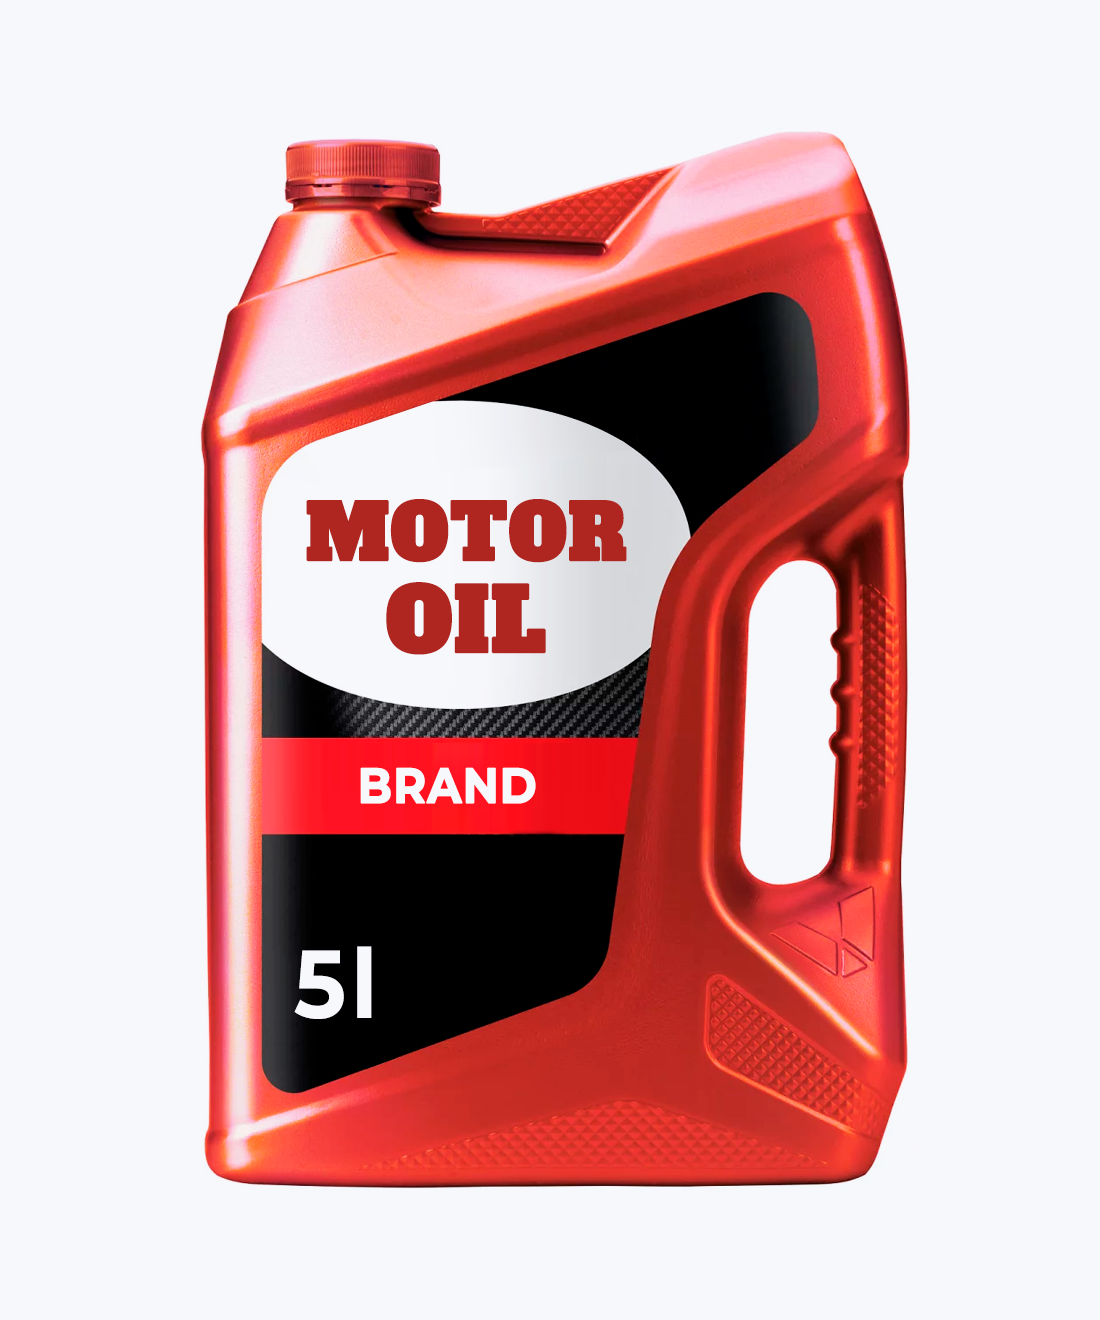 Synthetic motor oil